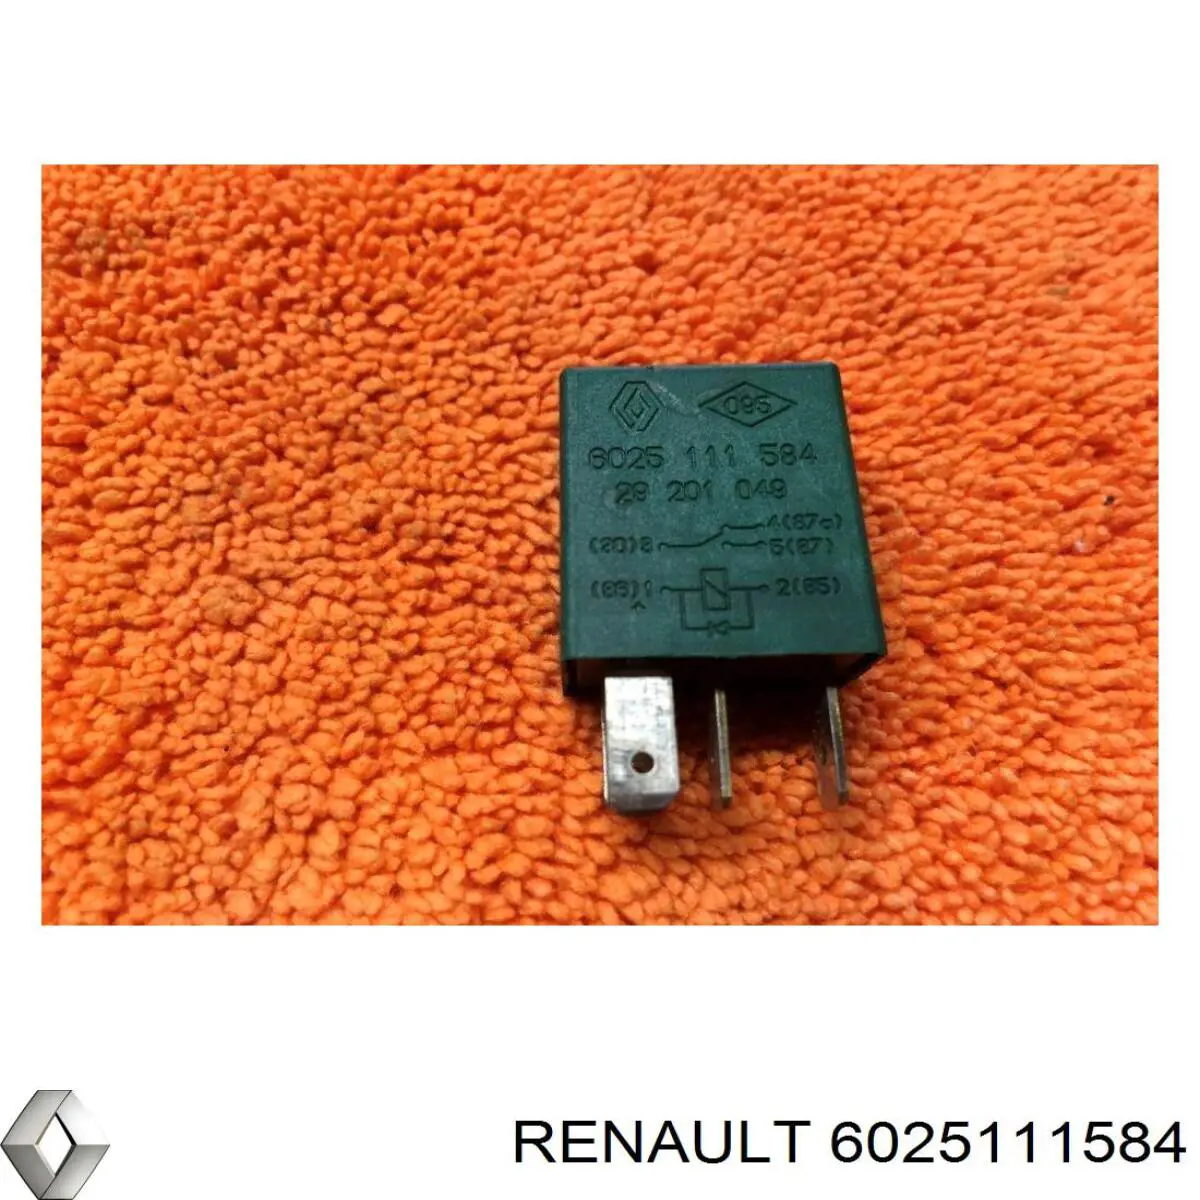 6025111584 Renault (RVI) relê elétrico multifuncional